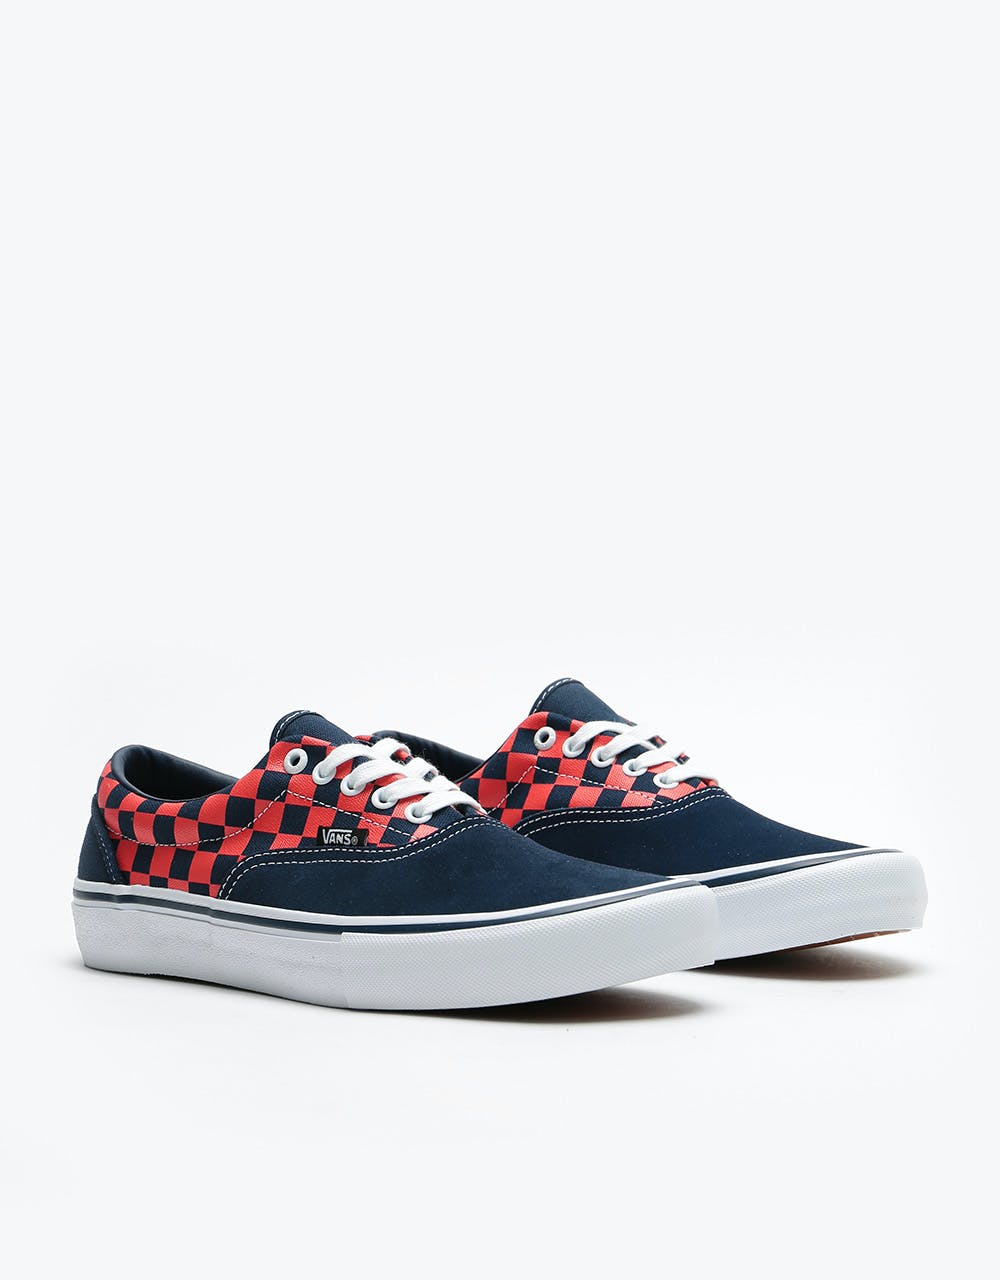 Vans Era Pro Skate Shoes - (Checkerboard) Navy/Orange – Route One